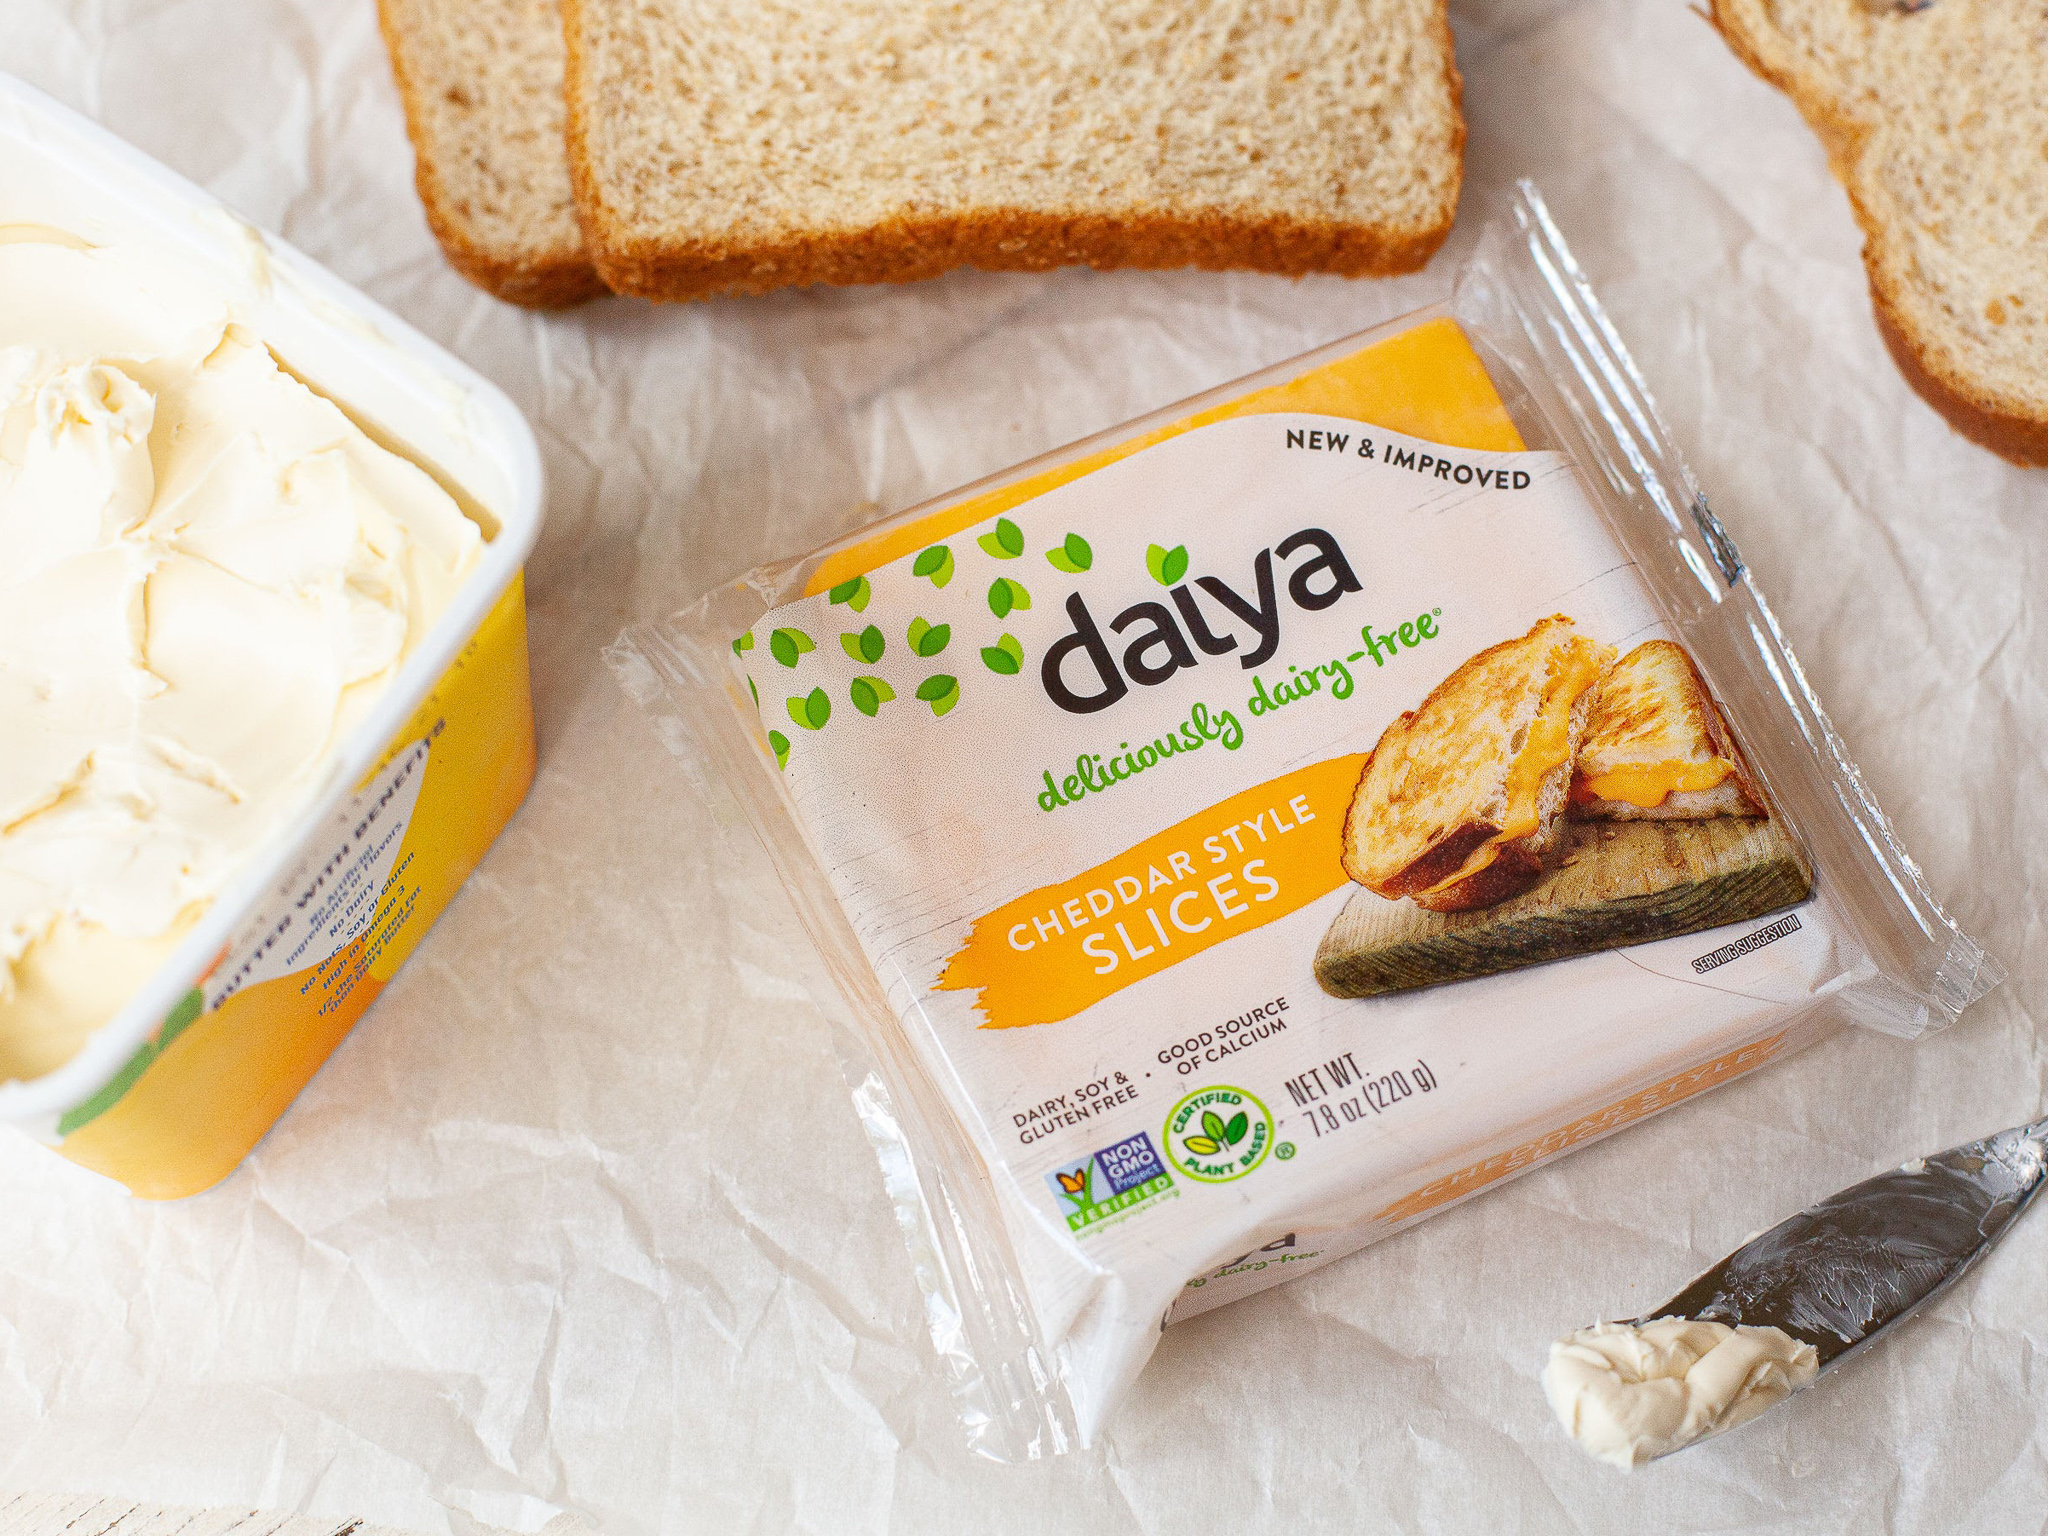 Daiya Dairy Free Cheddar Style Slices Just $2.24 At Publix (Regular Price $5.39)